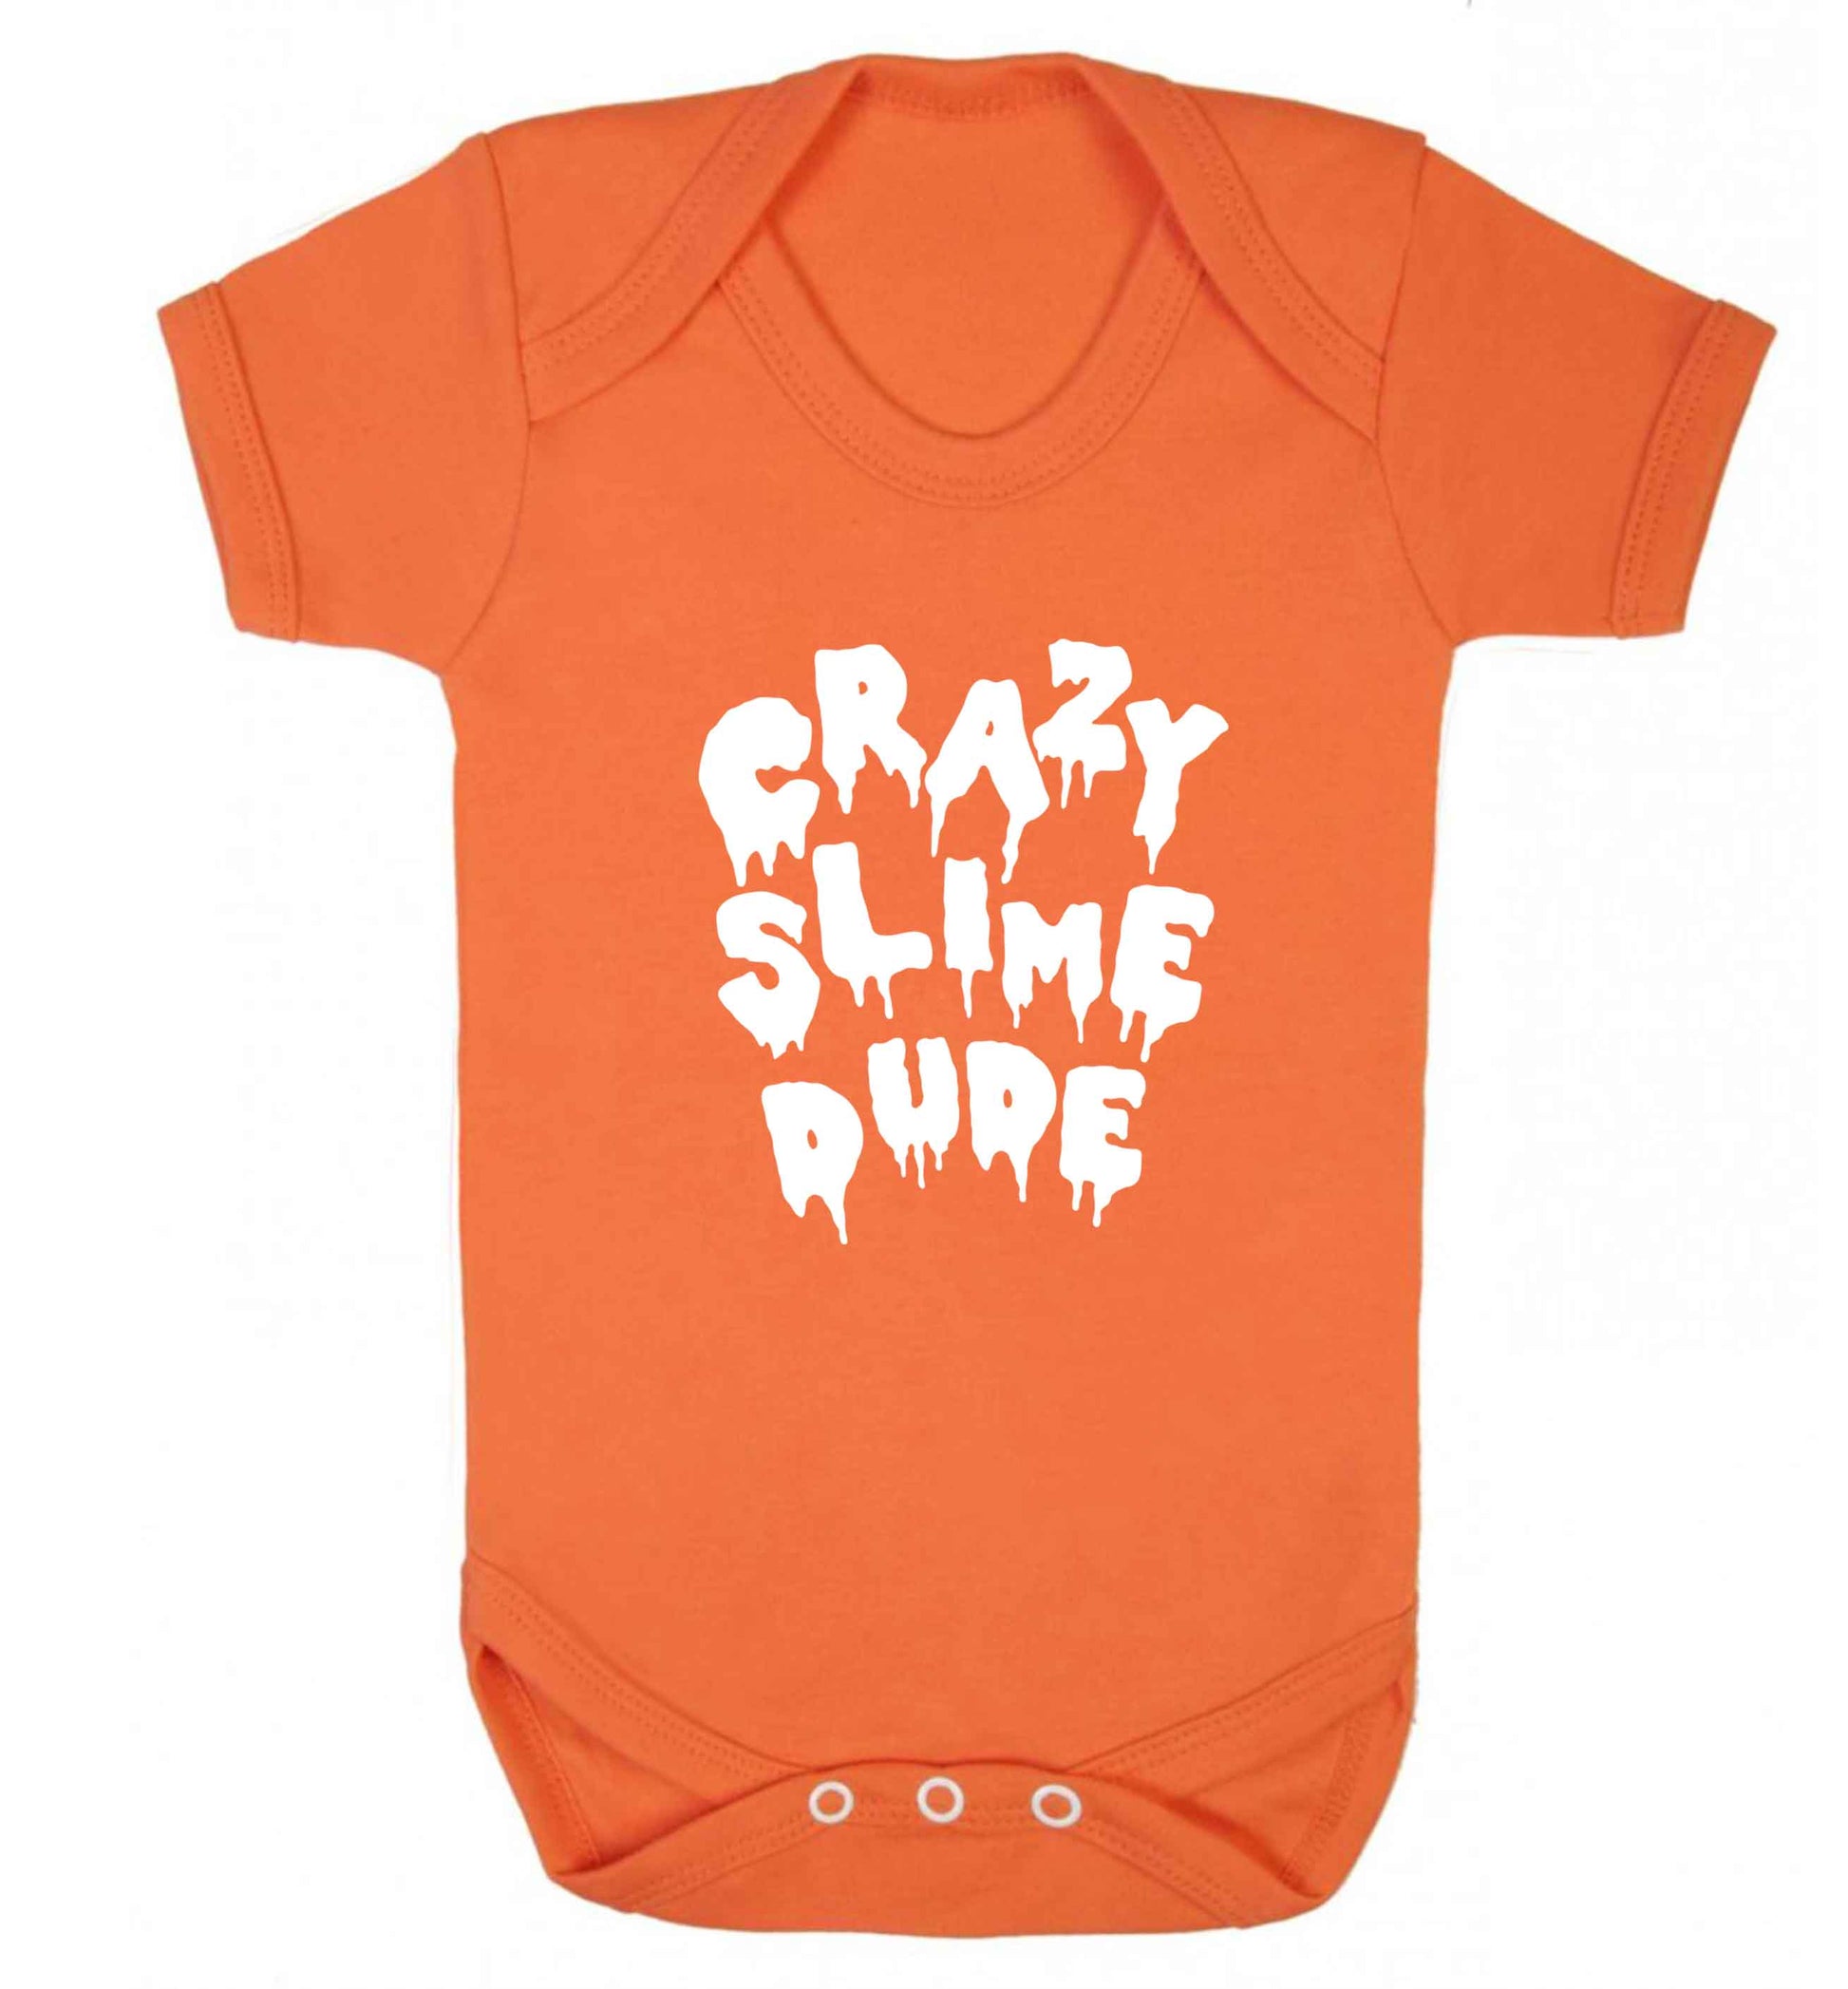 Crazy slime dude baby vest orange 18-24 months